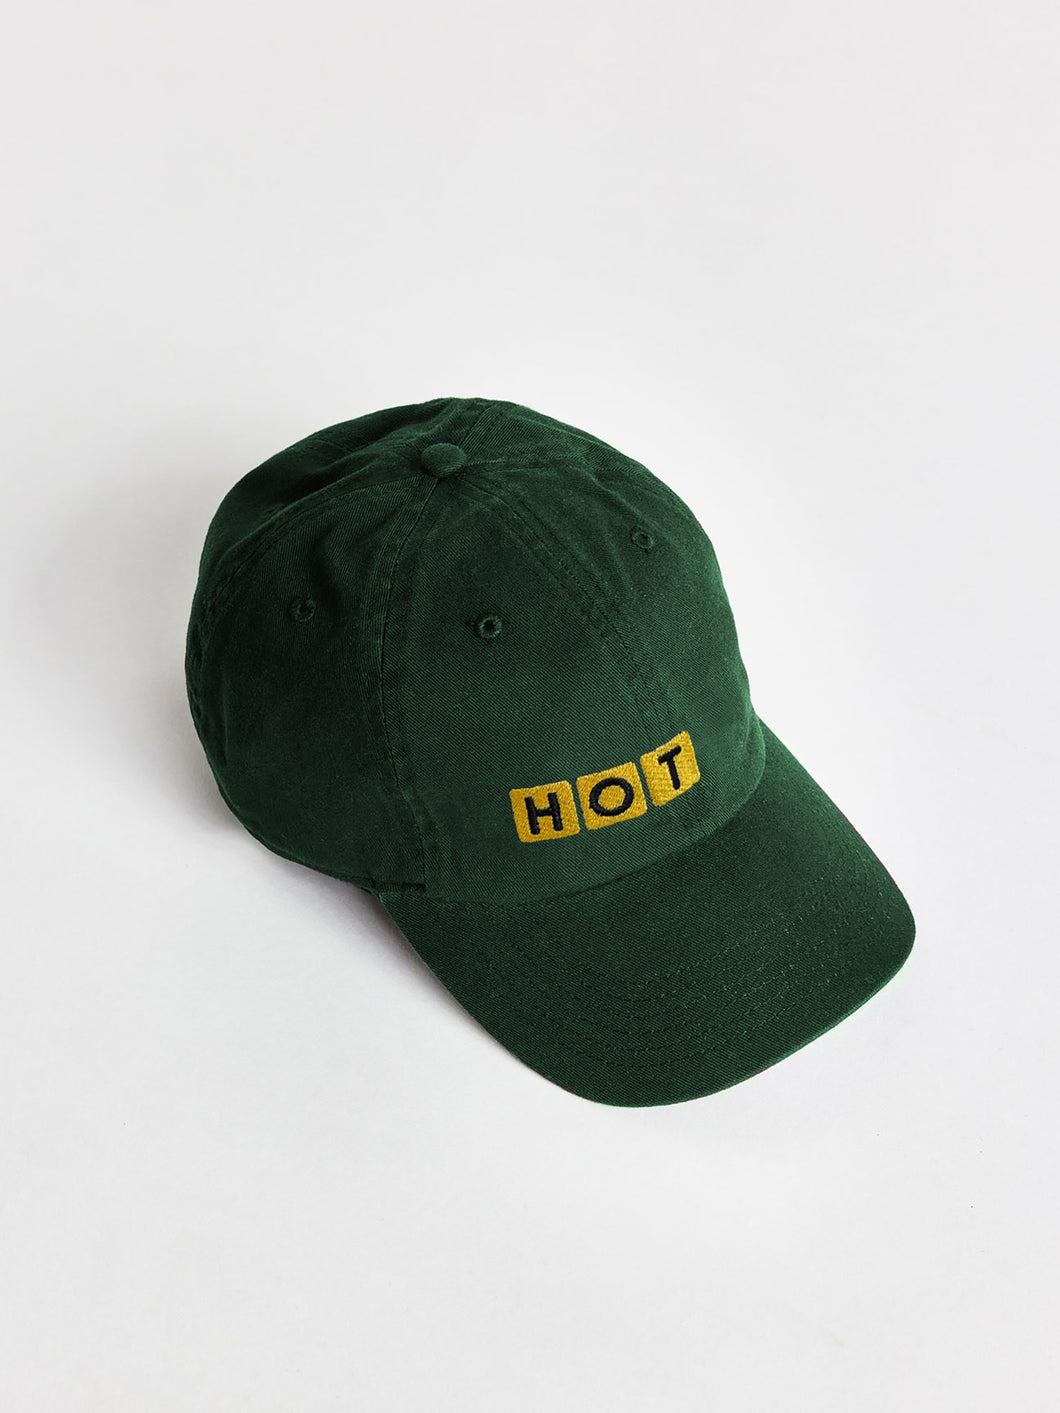 HOT Hat Racing Green